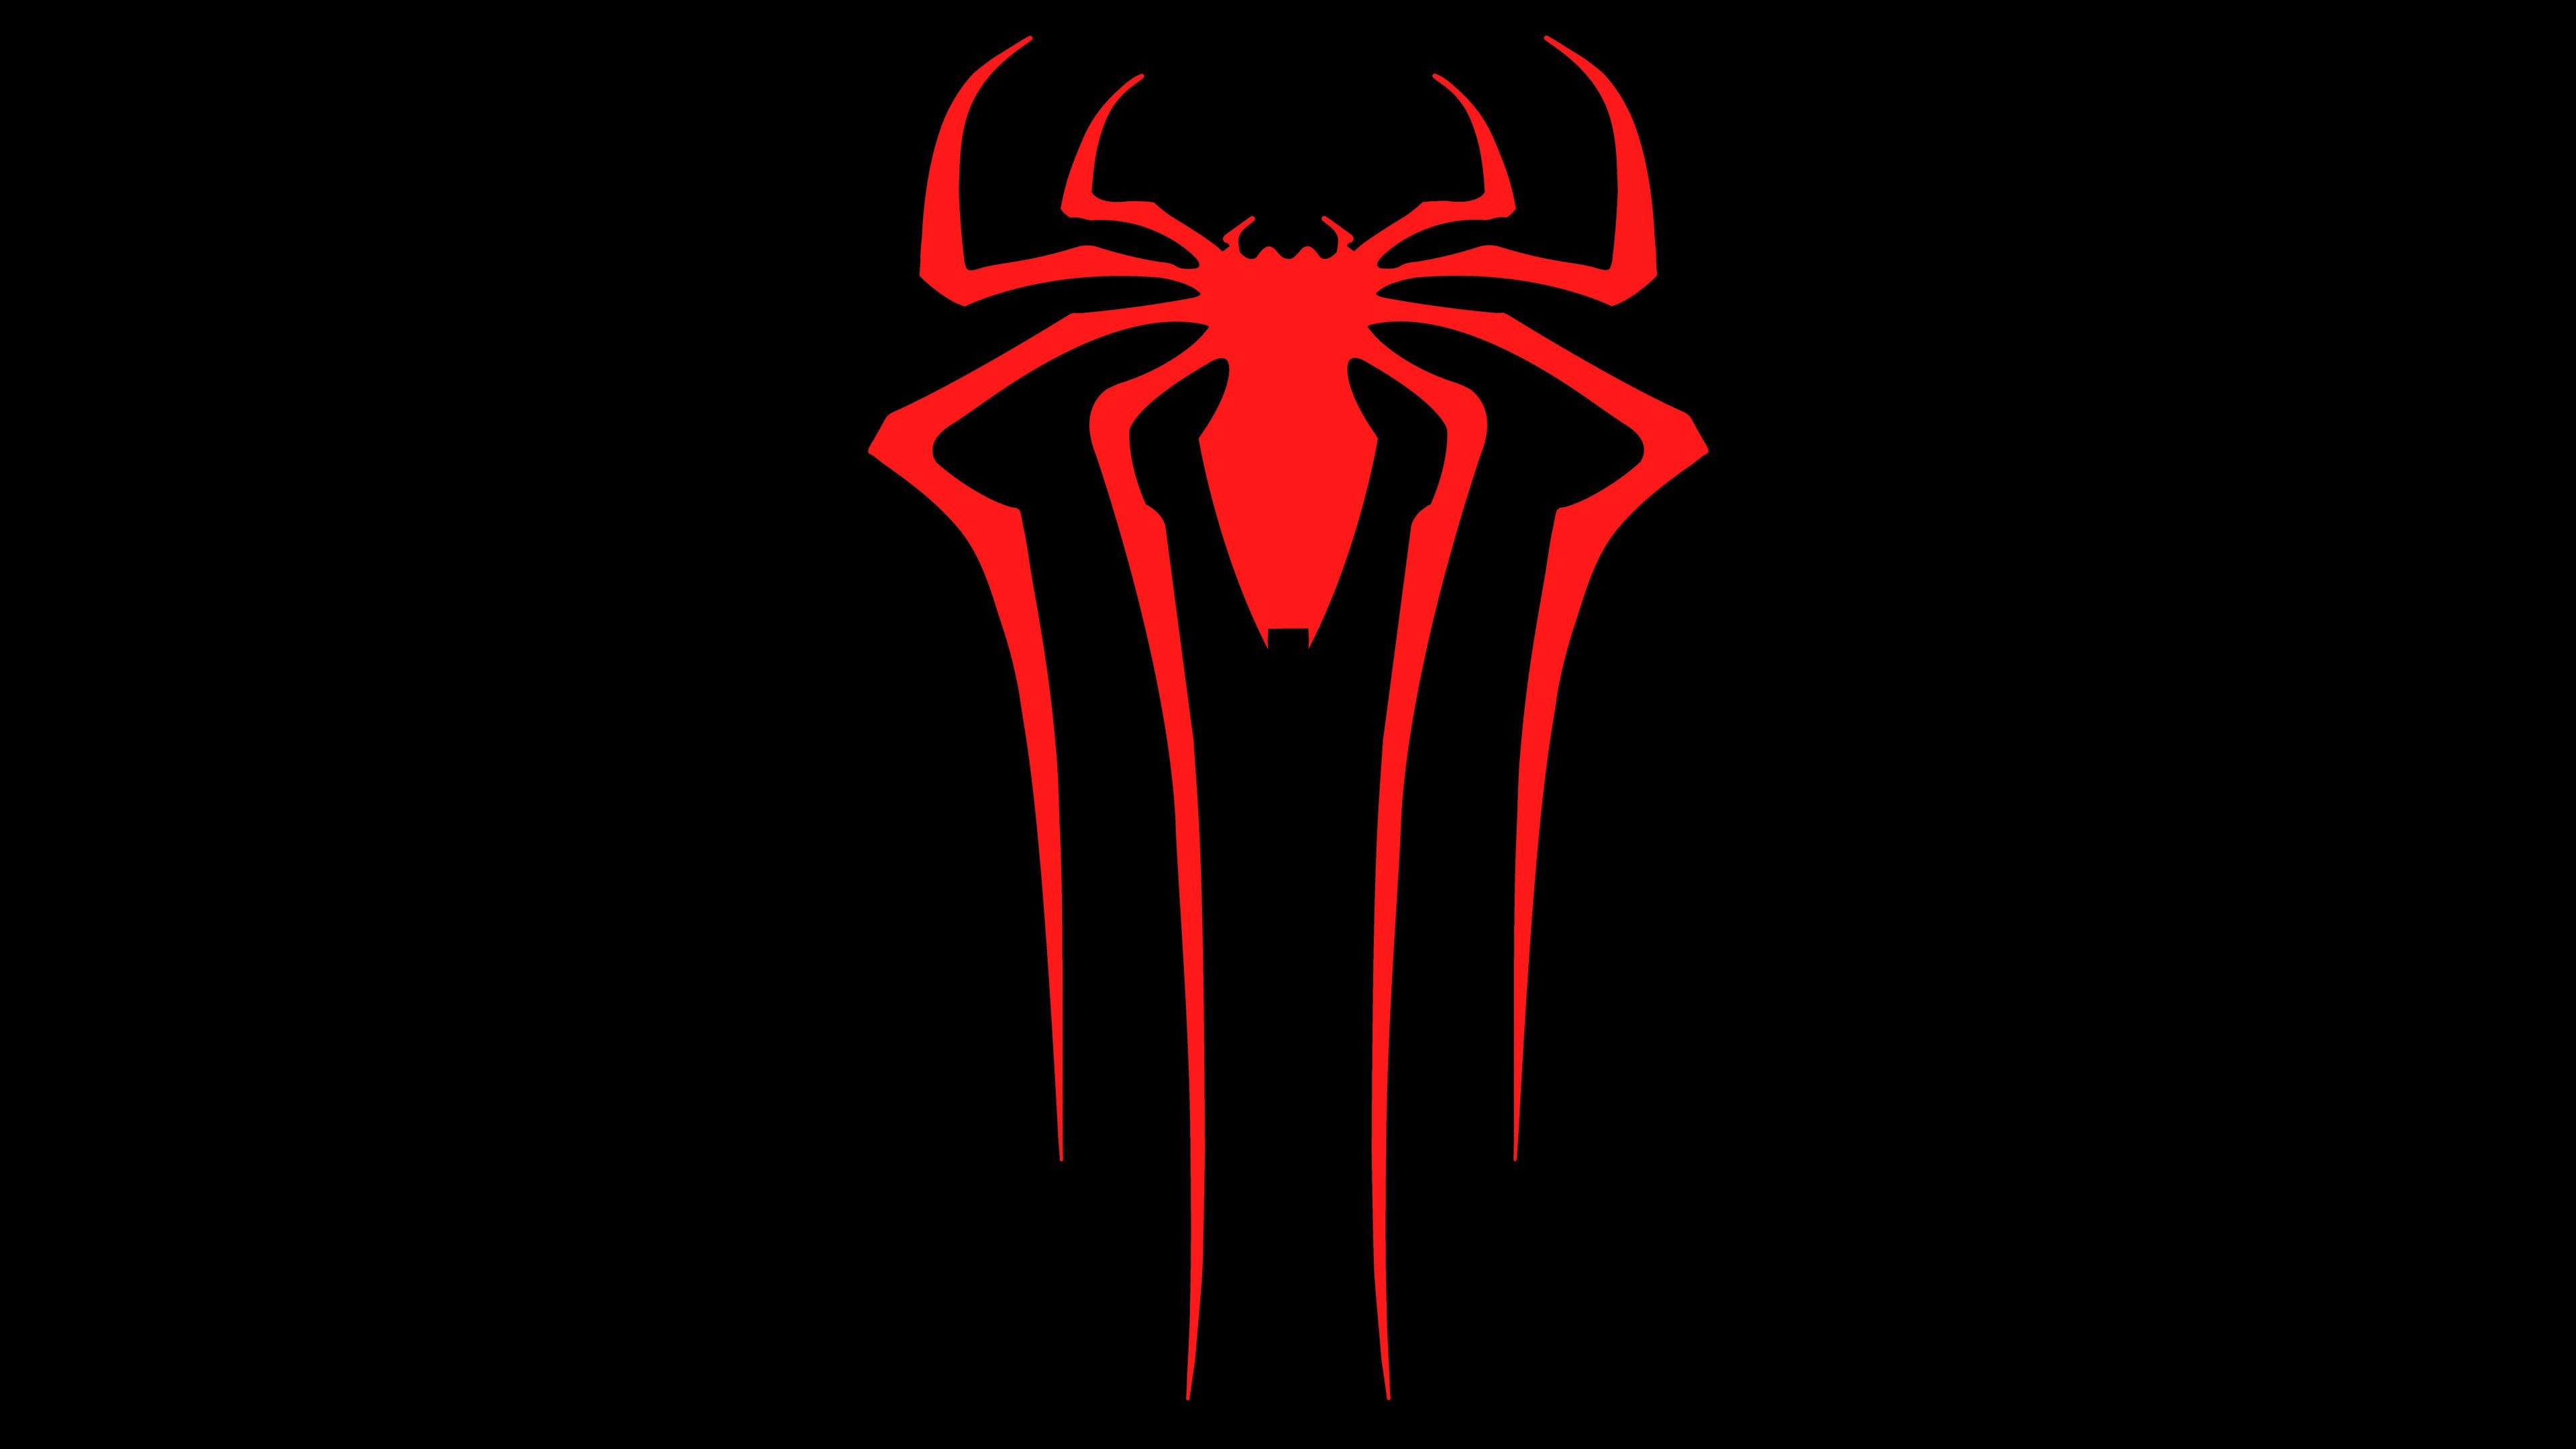 Spiderman Logo 8k. The amazing spiderman Amazing spiderman, Spiderman